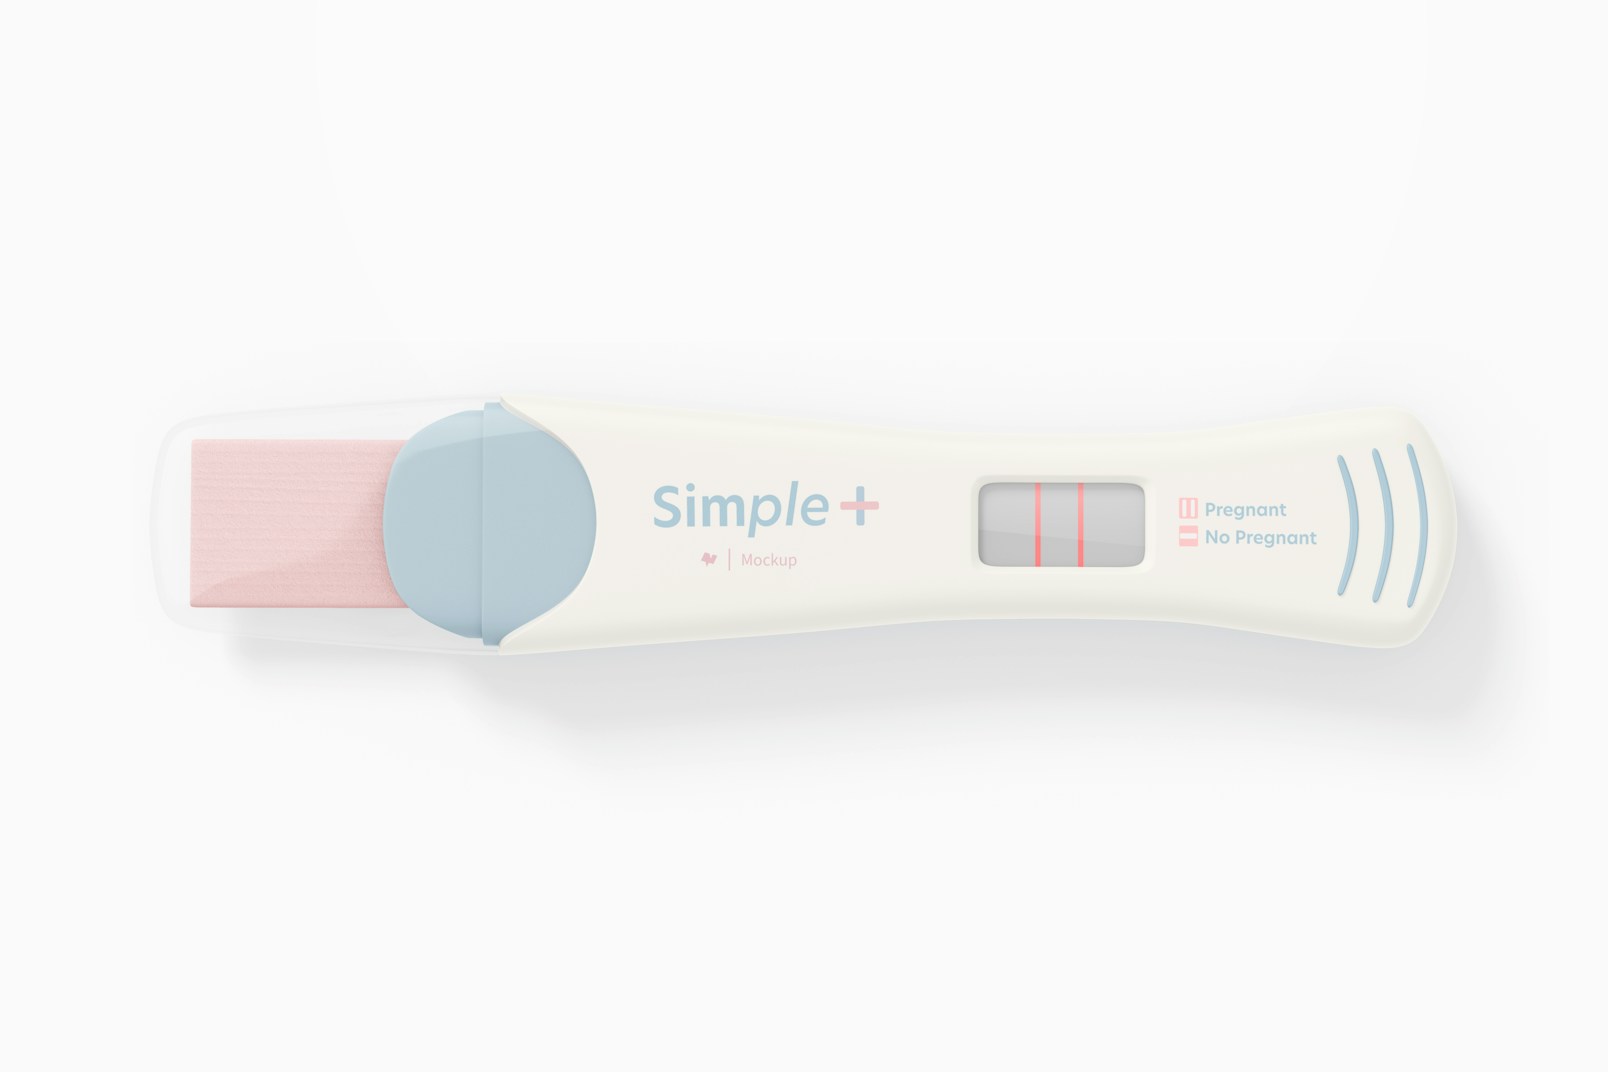 Maqueta de Prueba Digital de Embarazo, Vista Superior